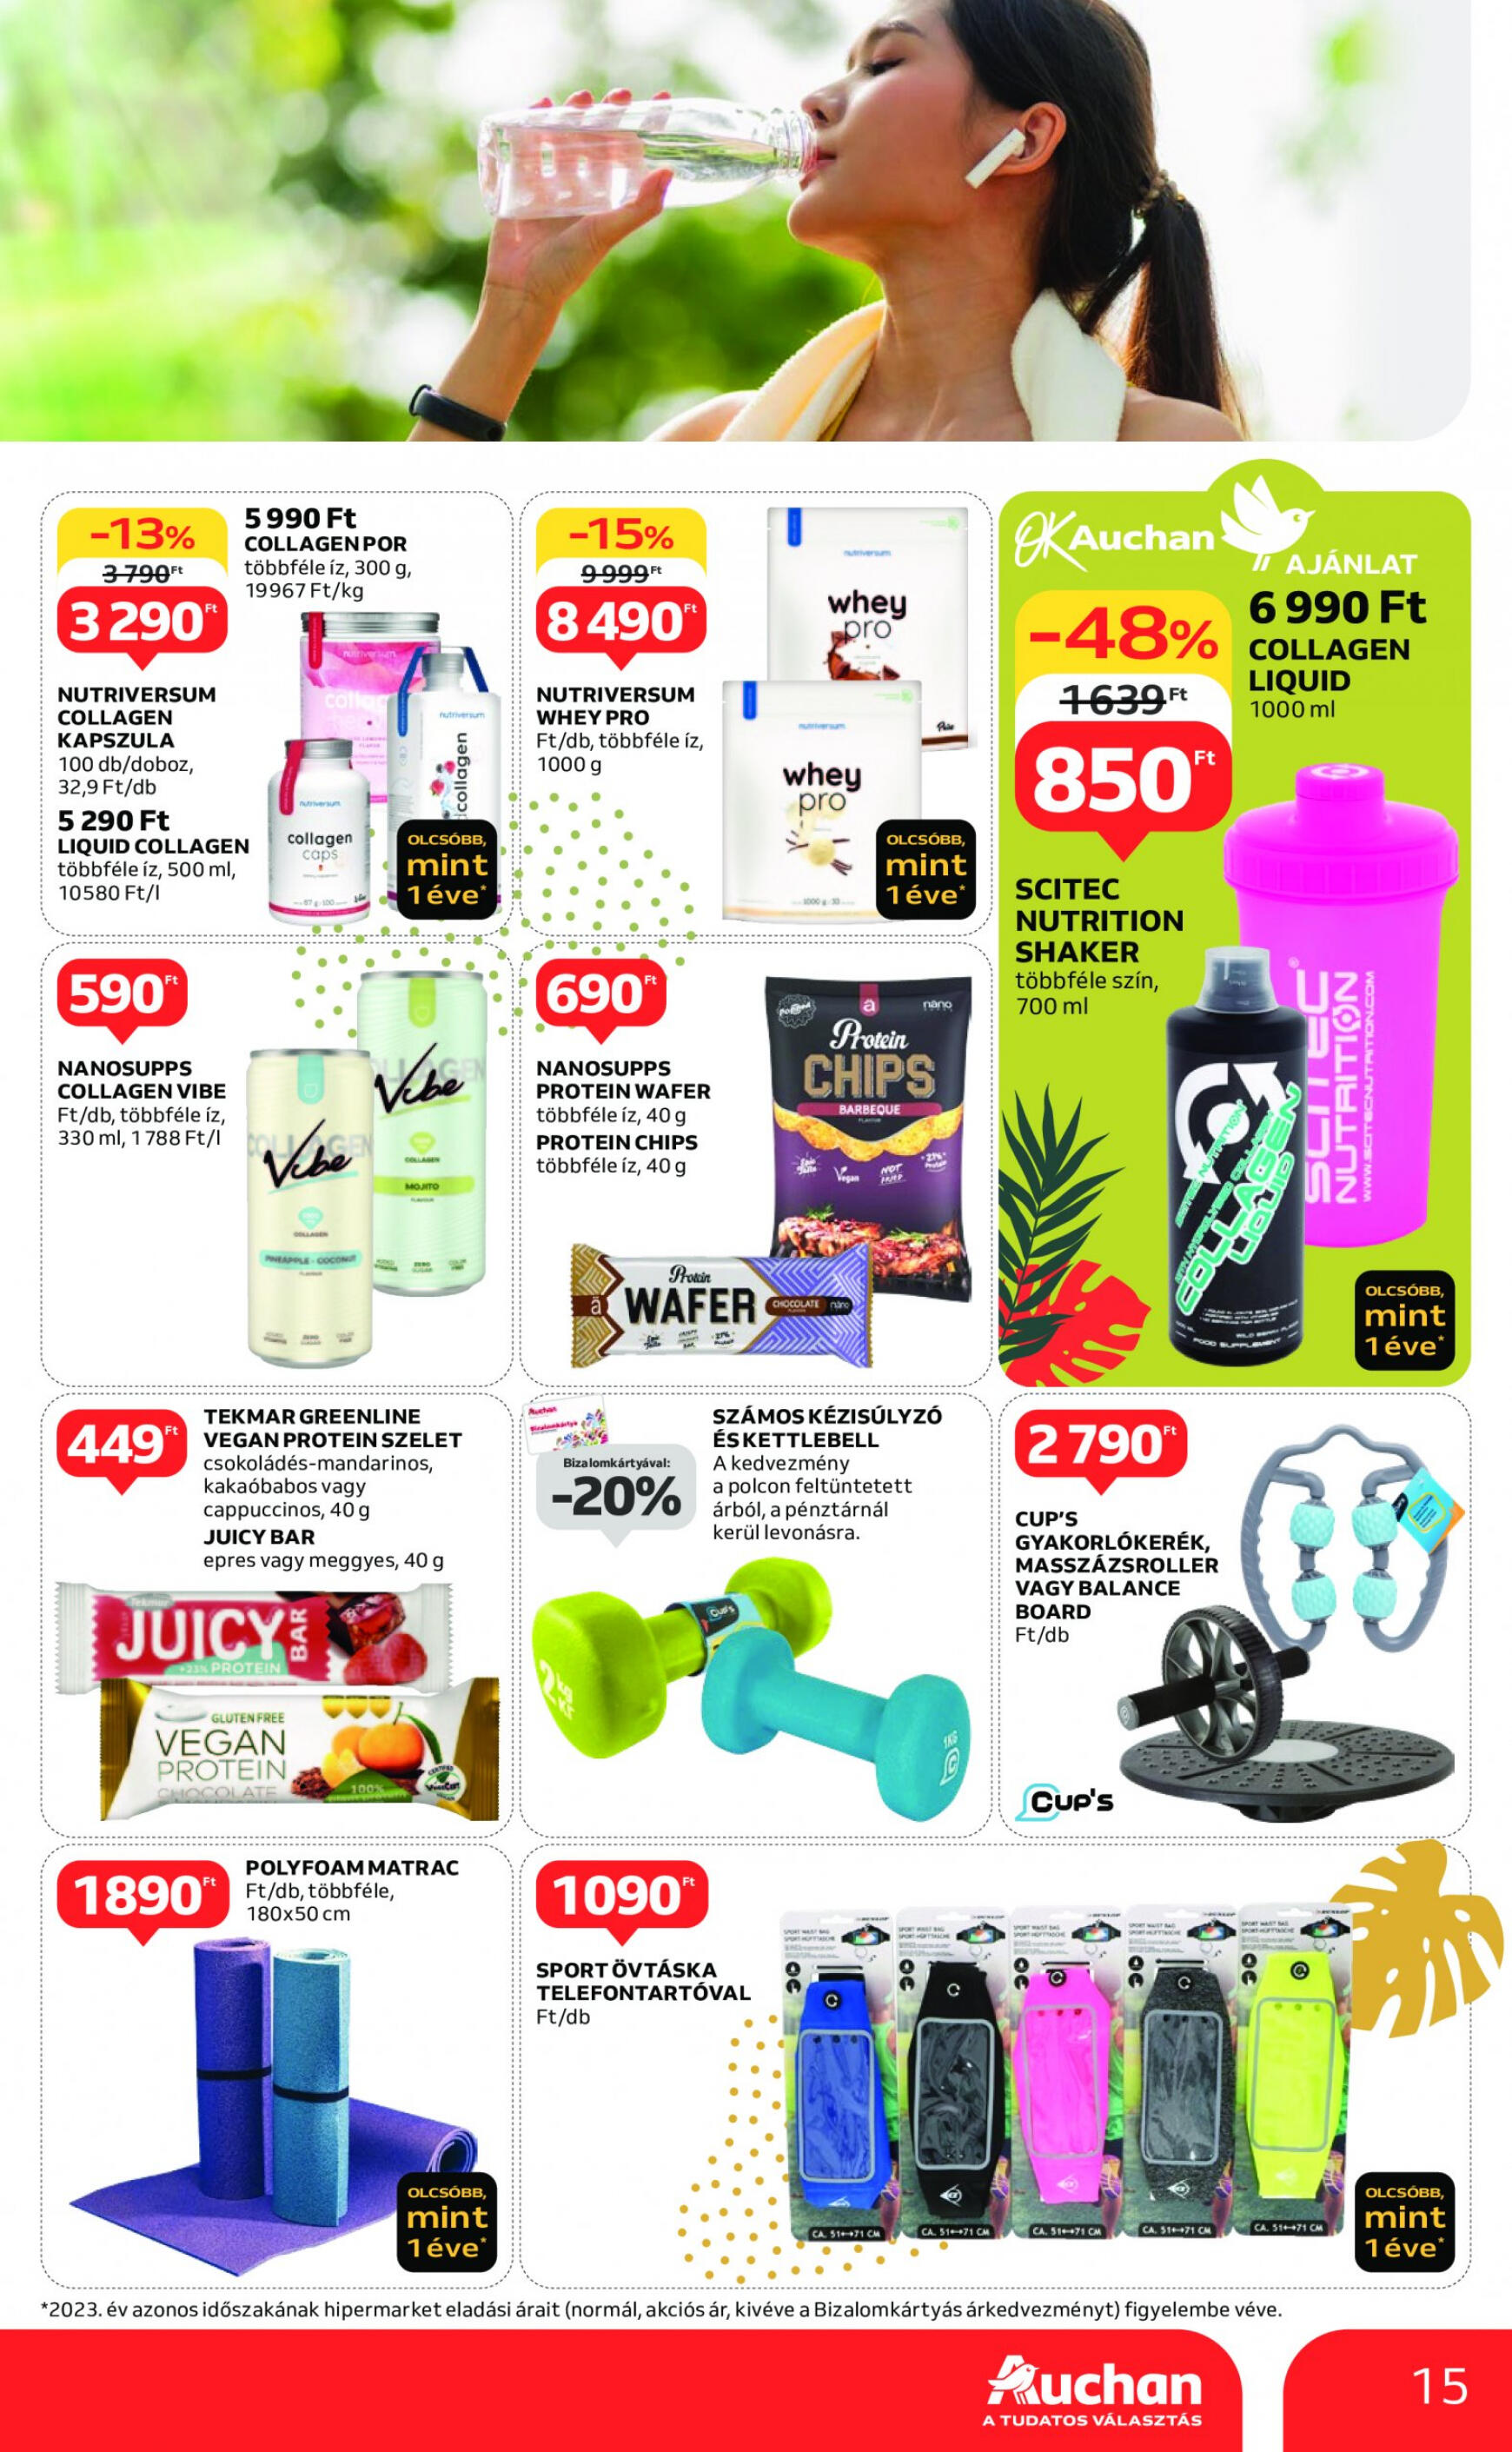 auchan - Aktuális újság Auchan 05.09. - 05.22. - page: 15